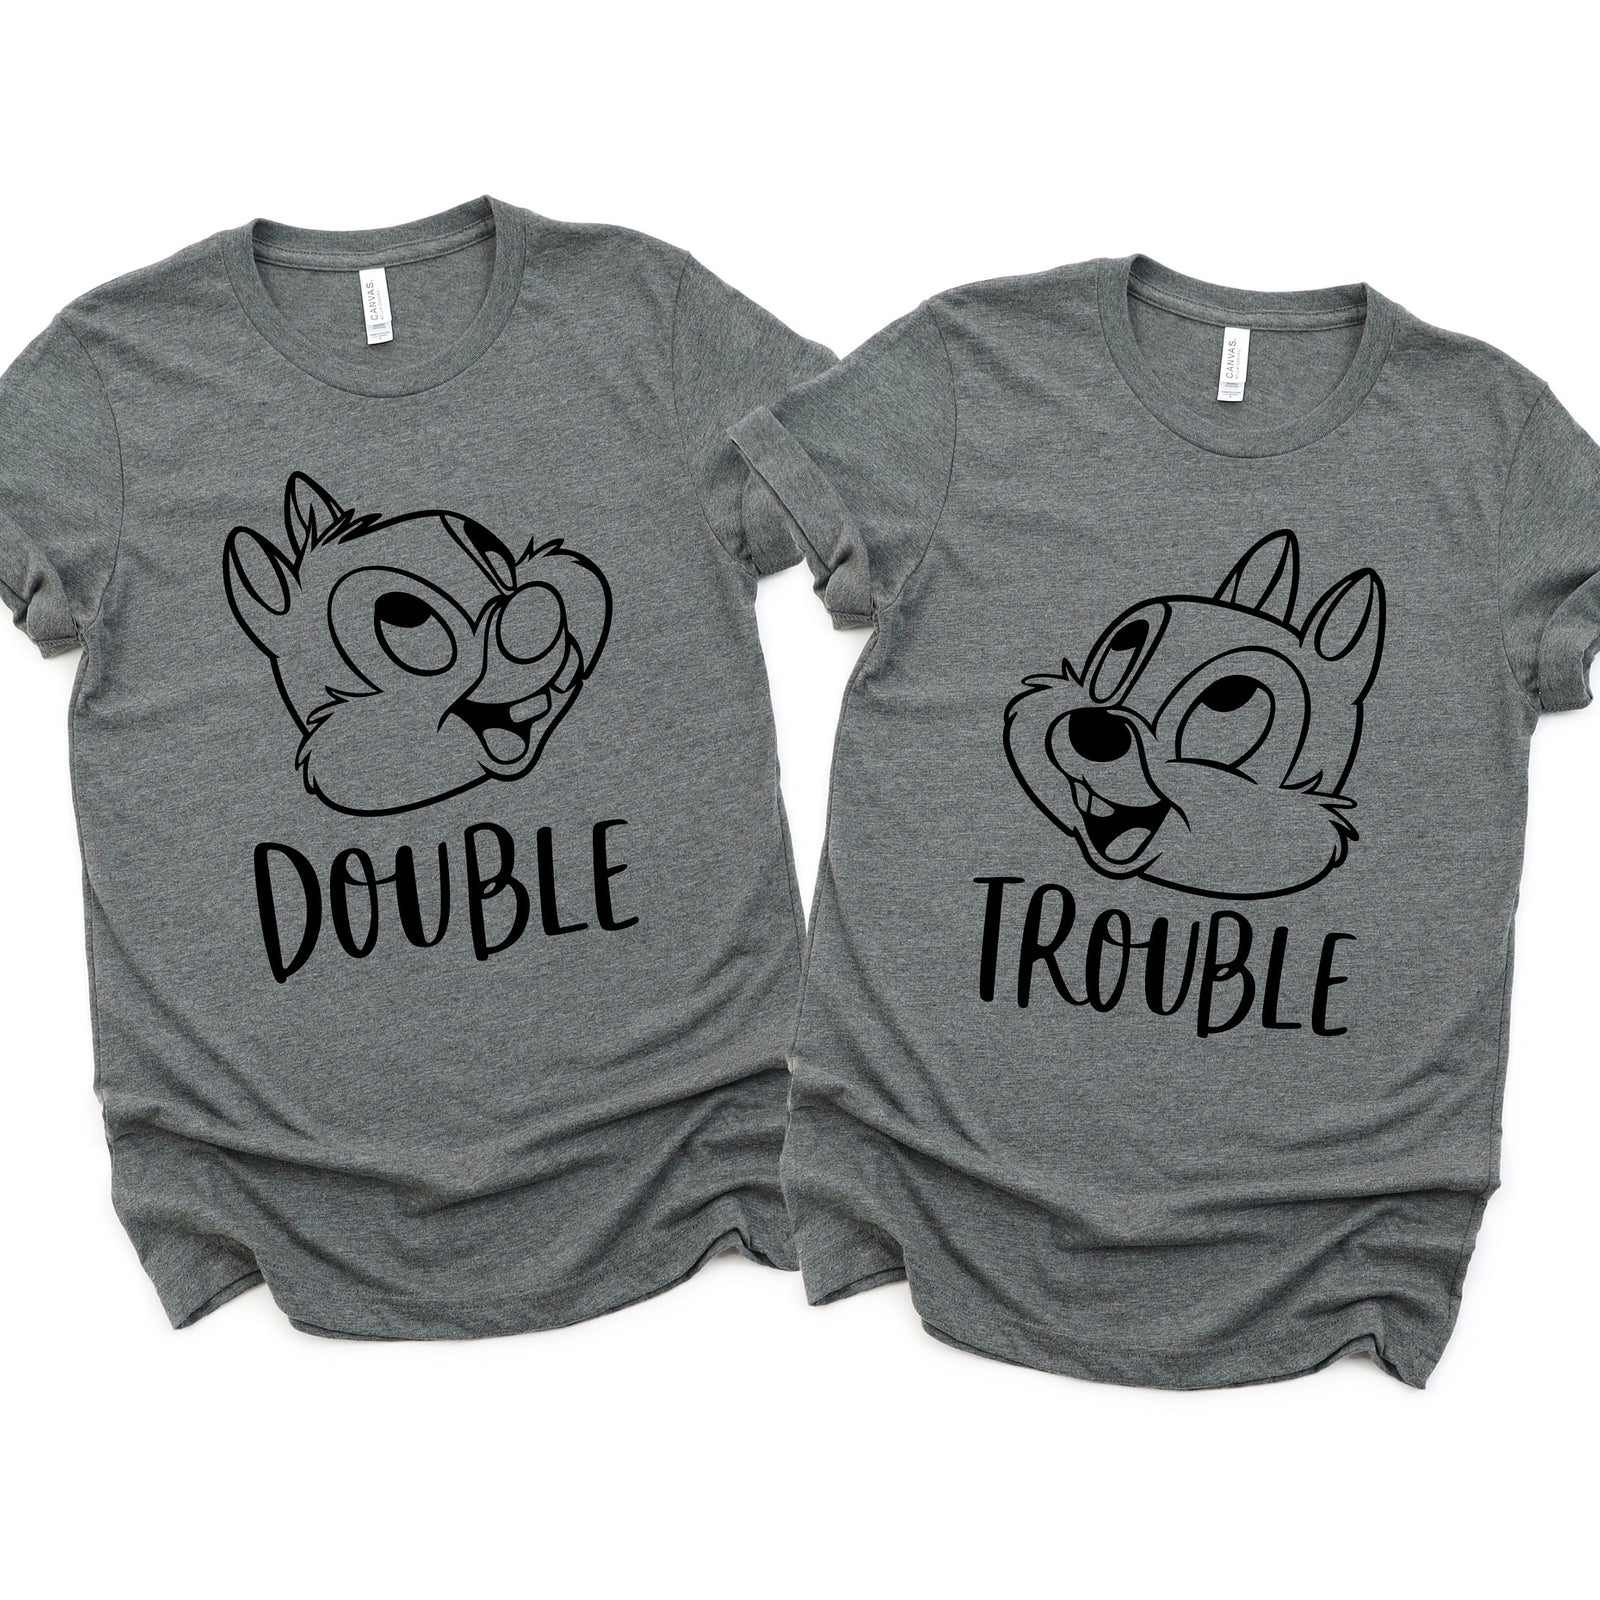 Double Trouble Adult Unisex Shirts - Disney Couples - Disney Matching Shirts - Chipmunks